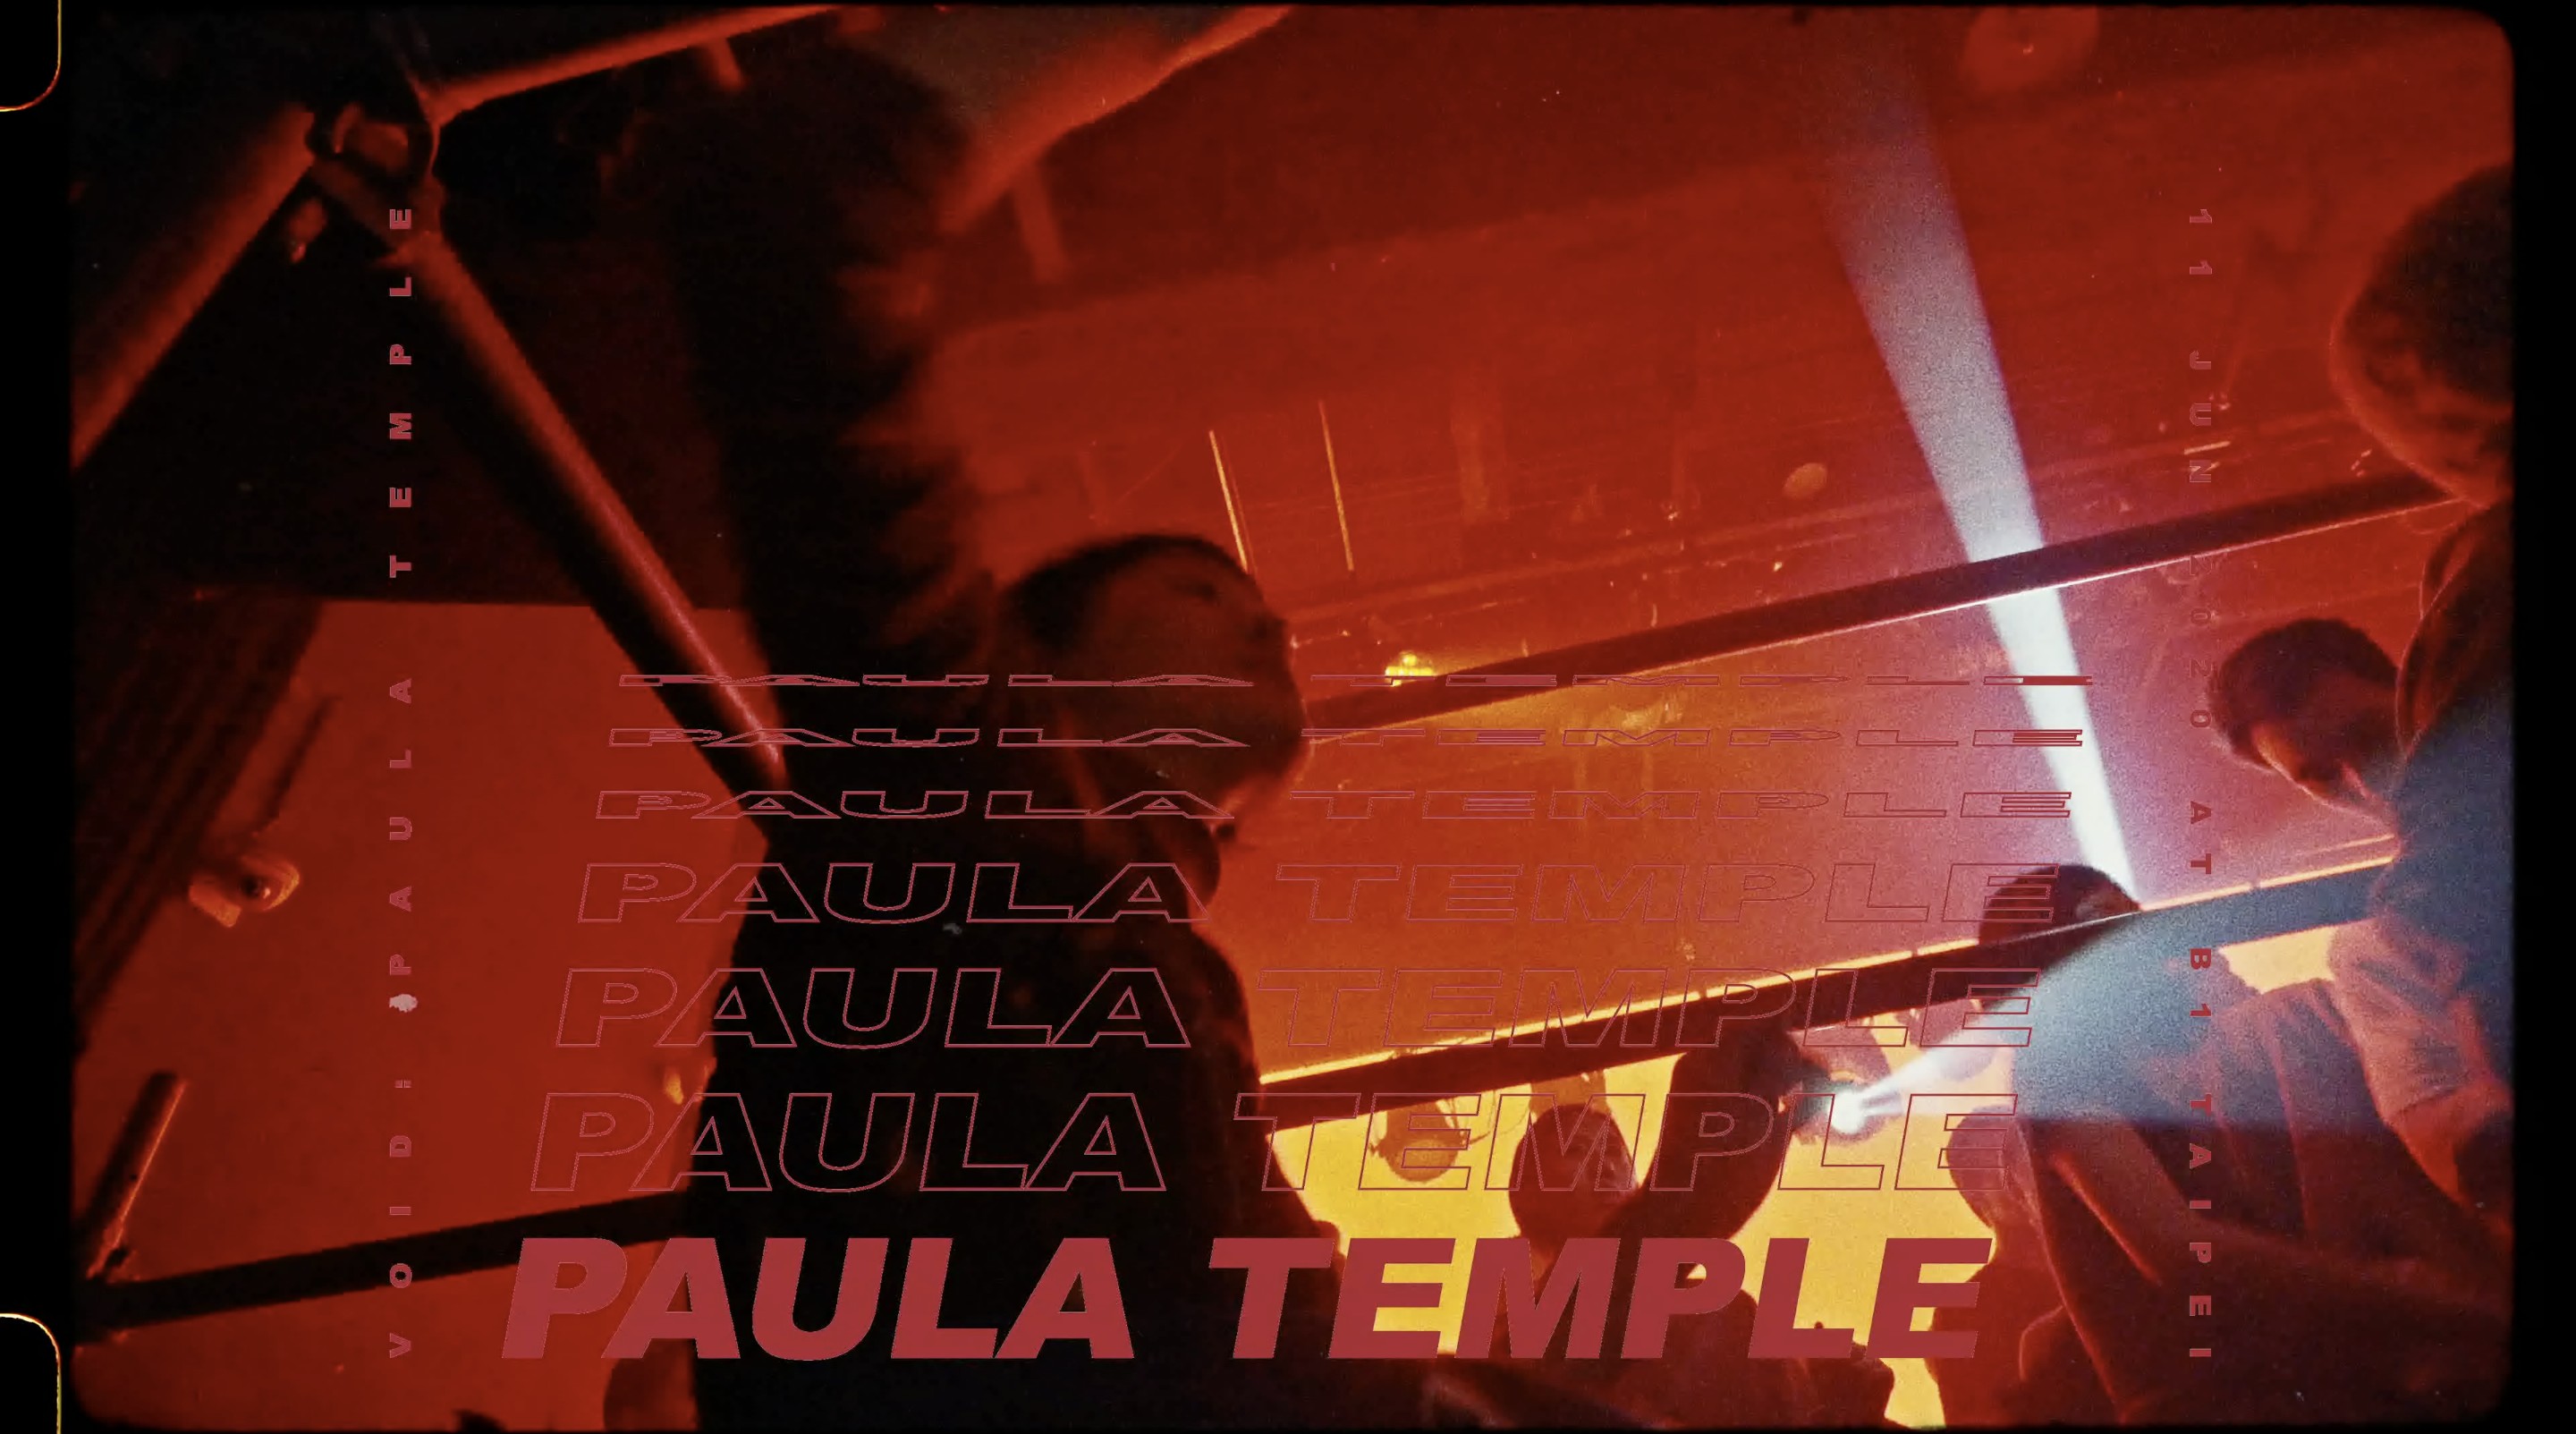 VOID x B1 club x Paula Temple 